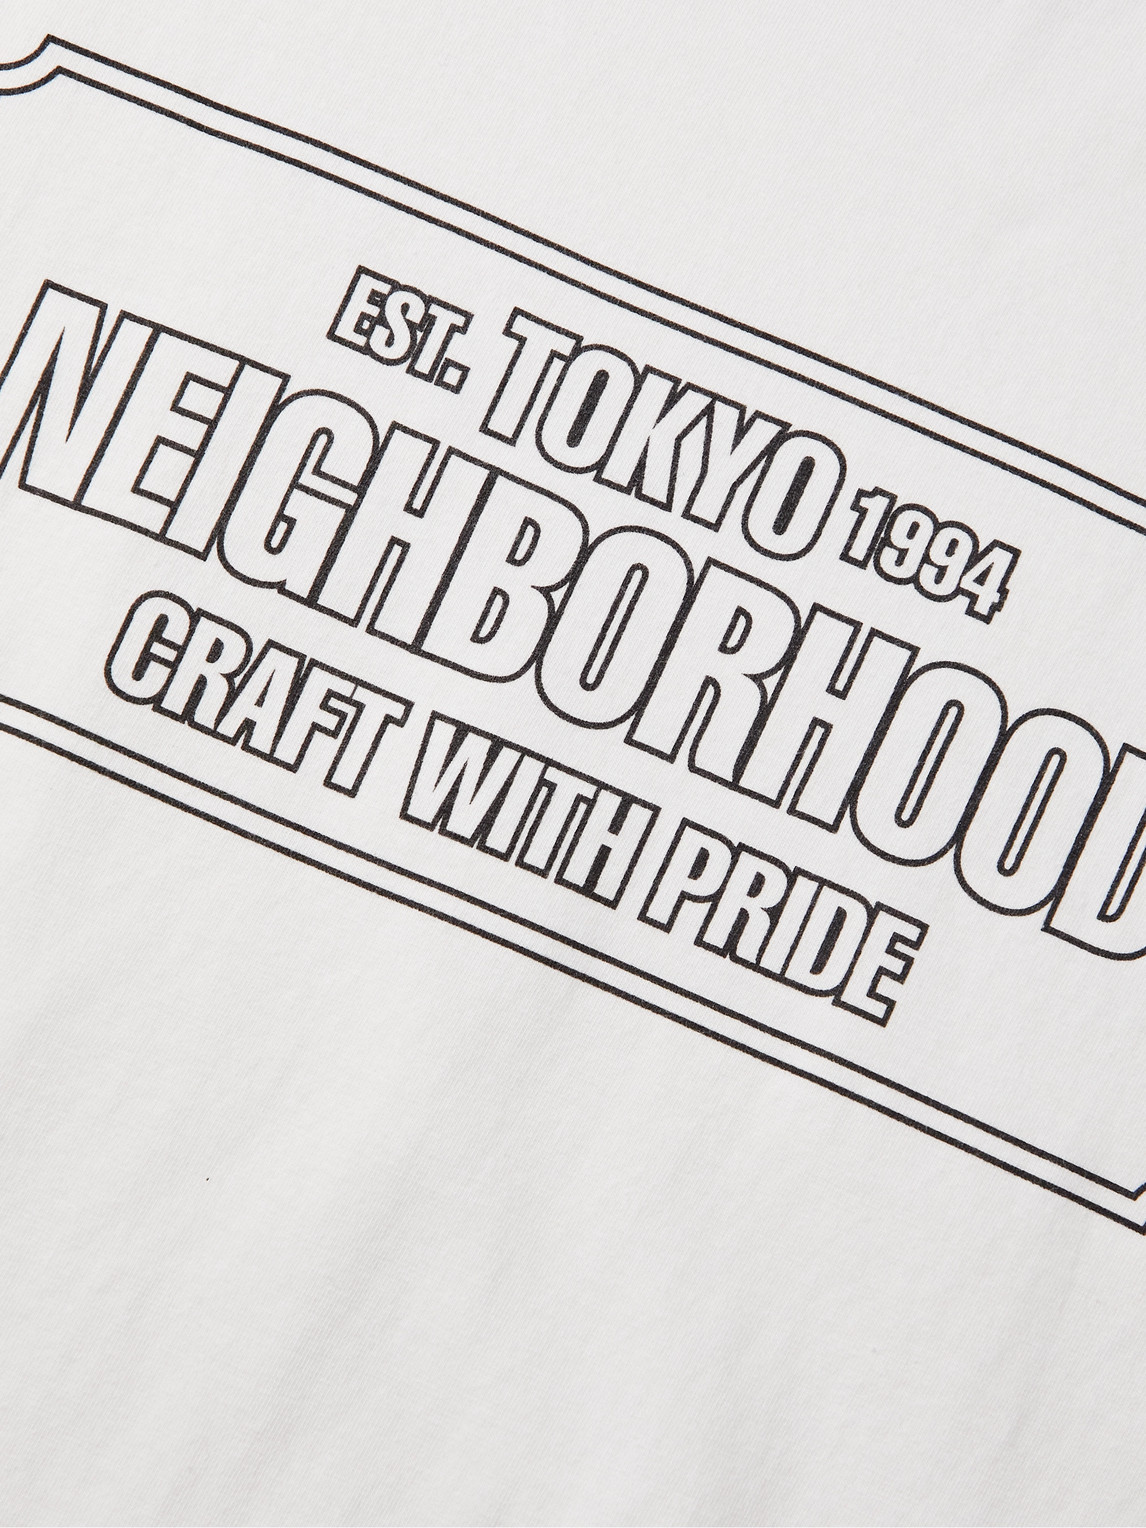 Shop Neighborhood Logo-print Cotton-jersey T-shirt In White